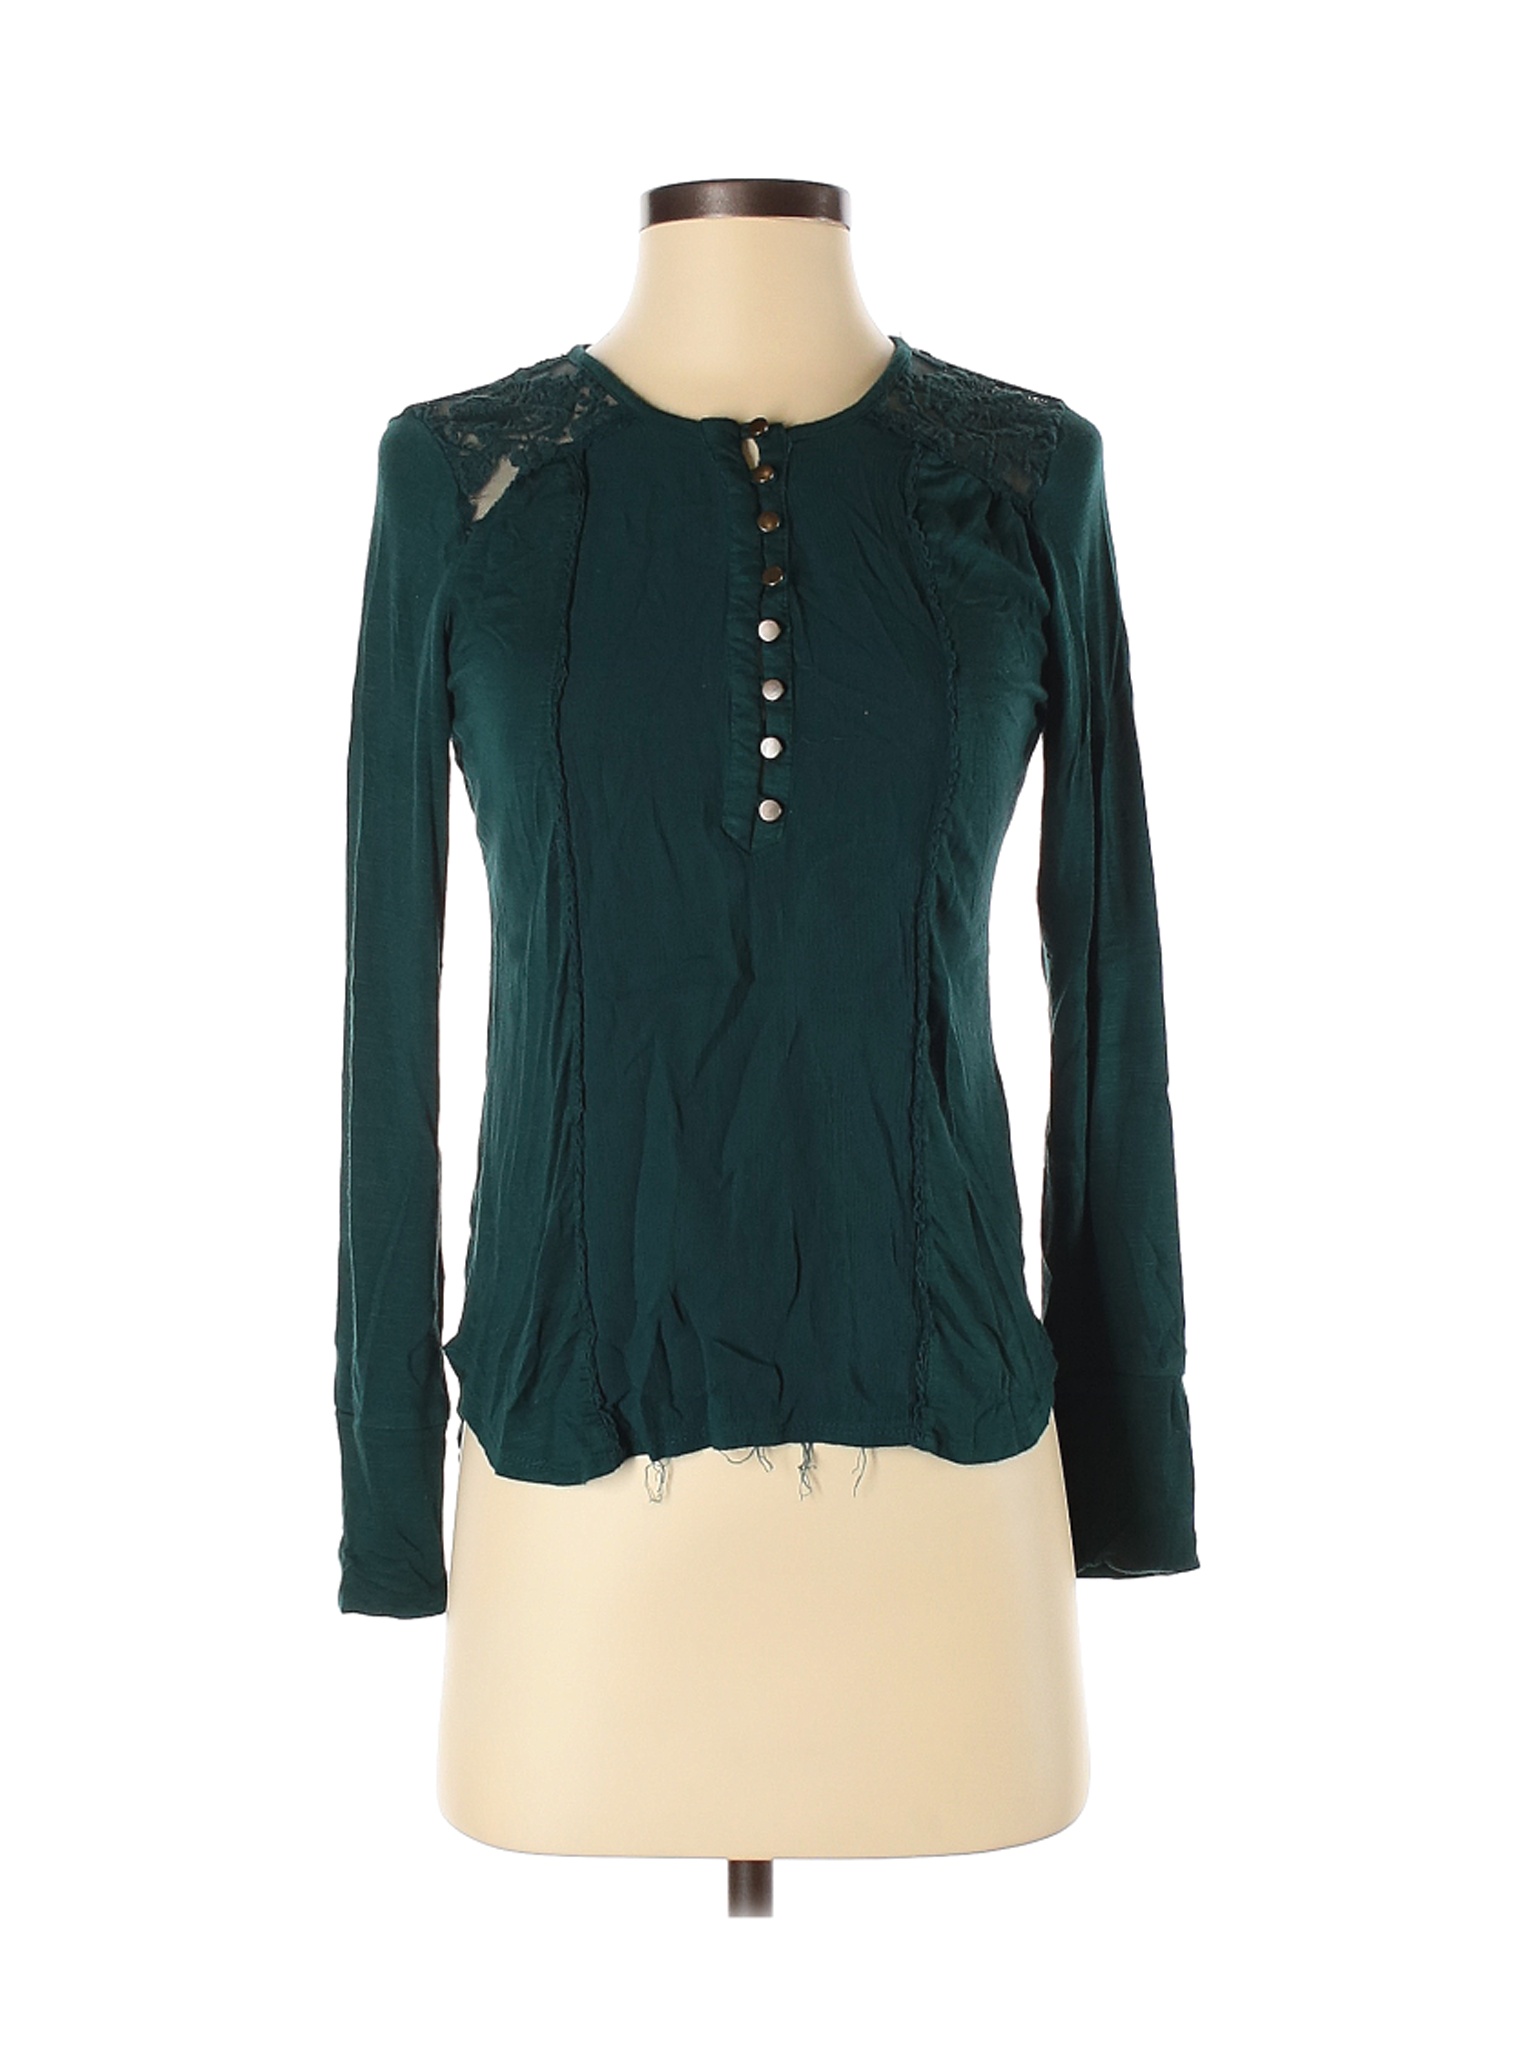 Maurices Women Green Long Sleeve Top XS | eBay